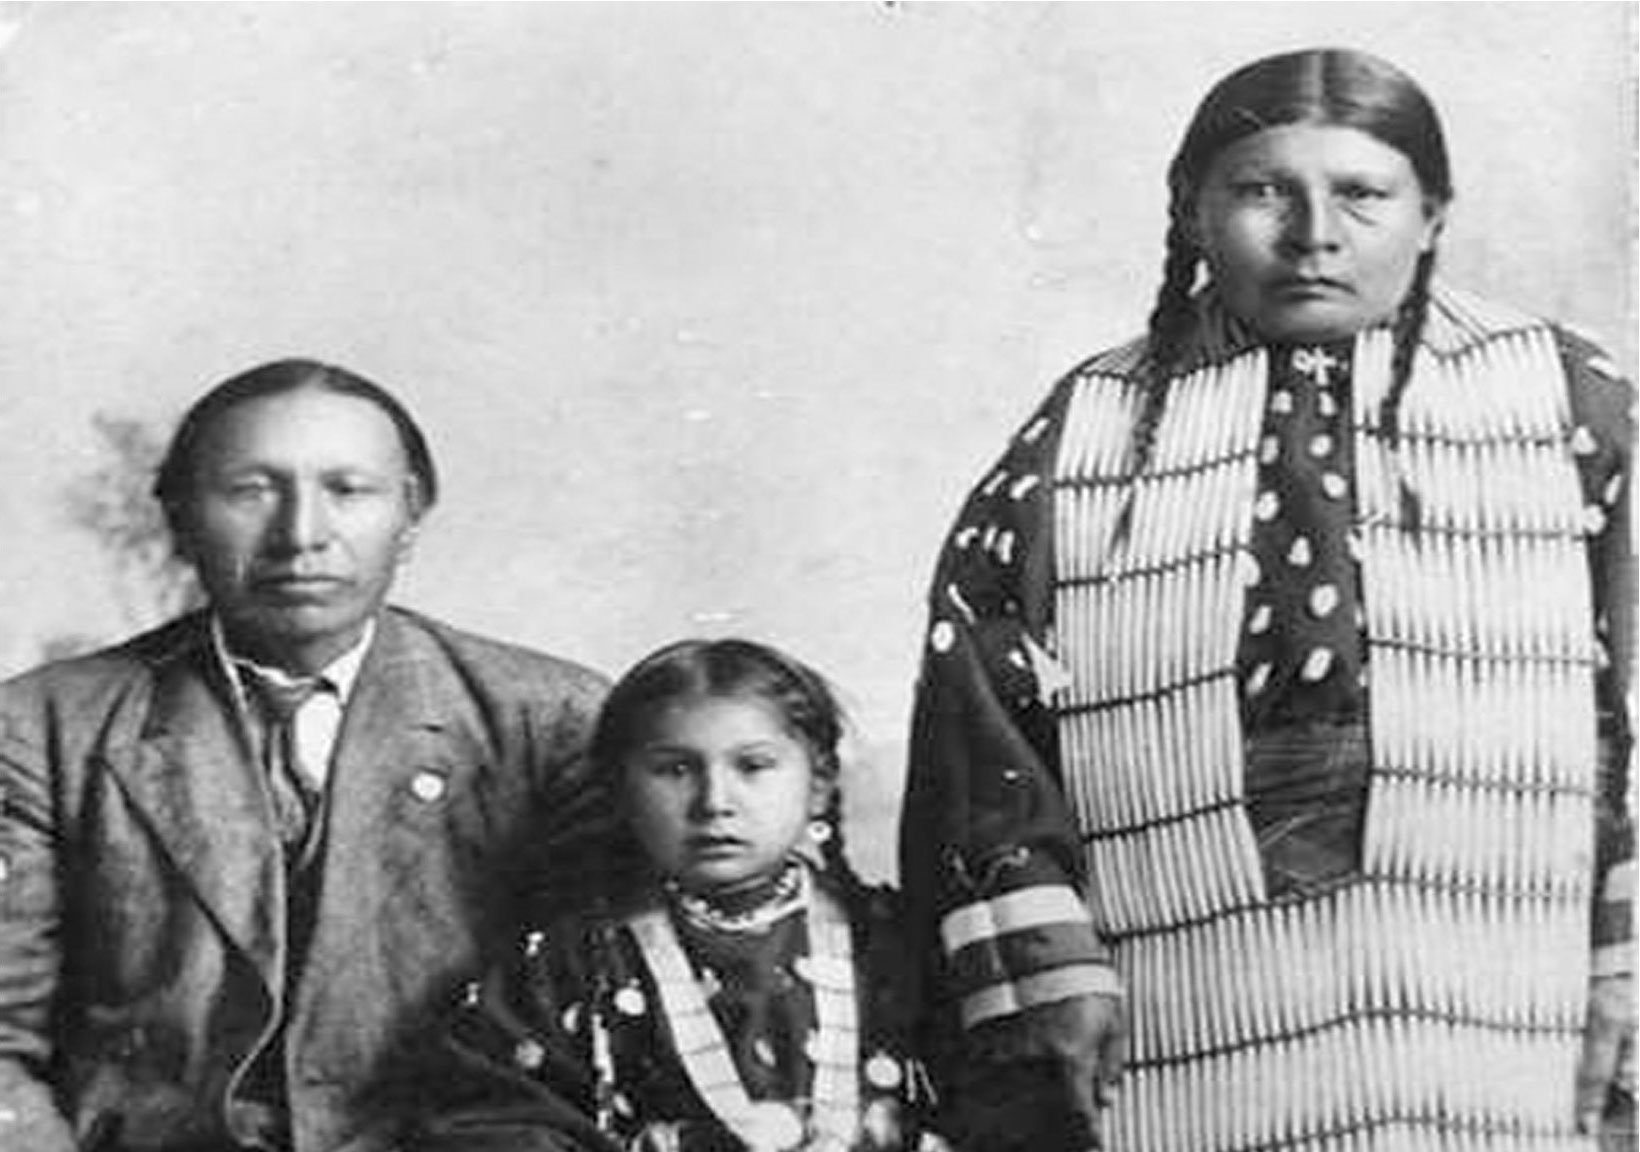 Native American Family